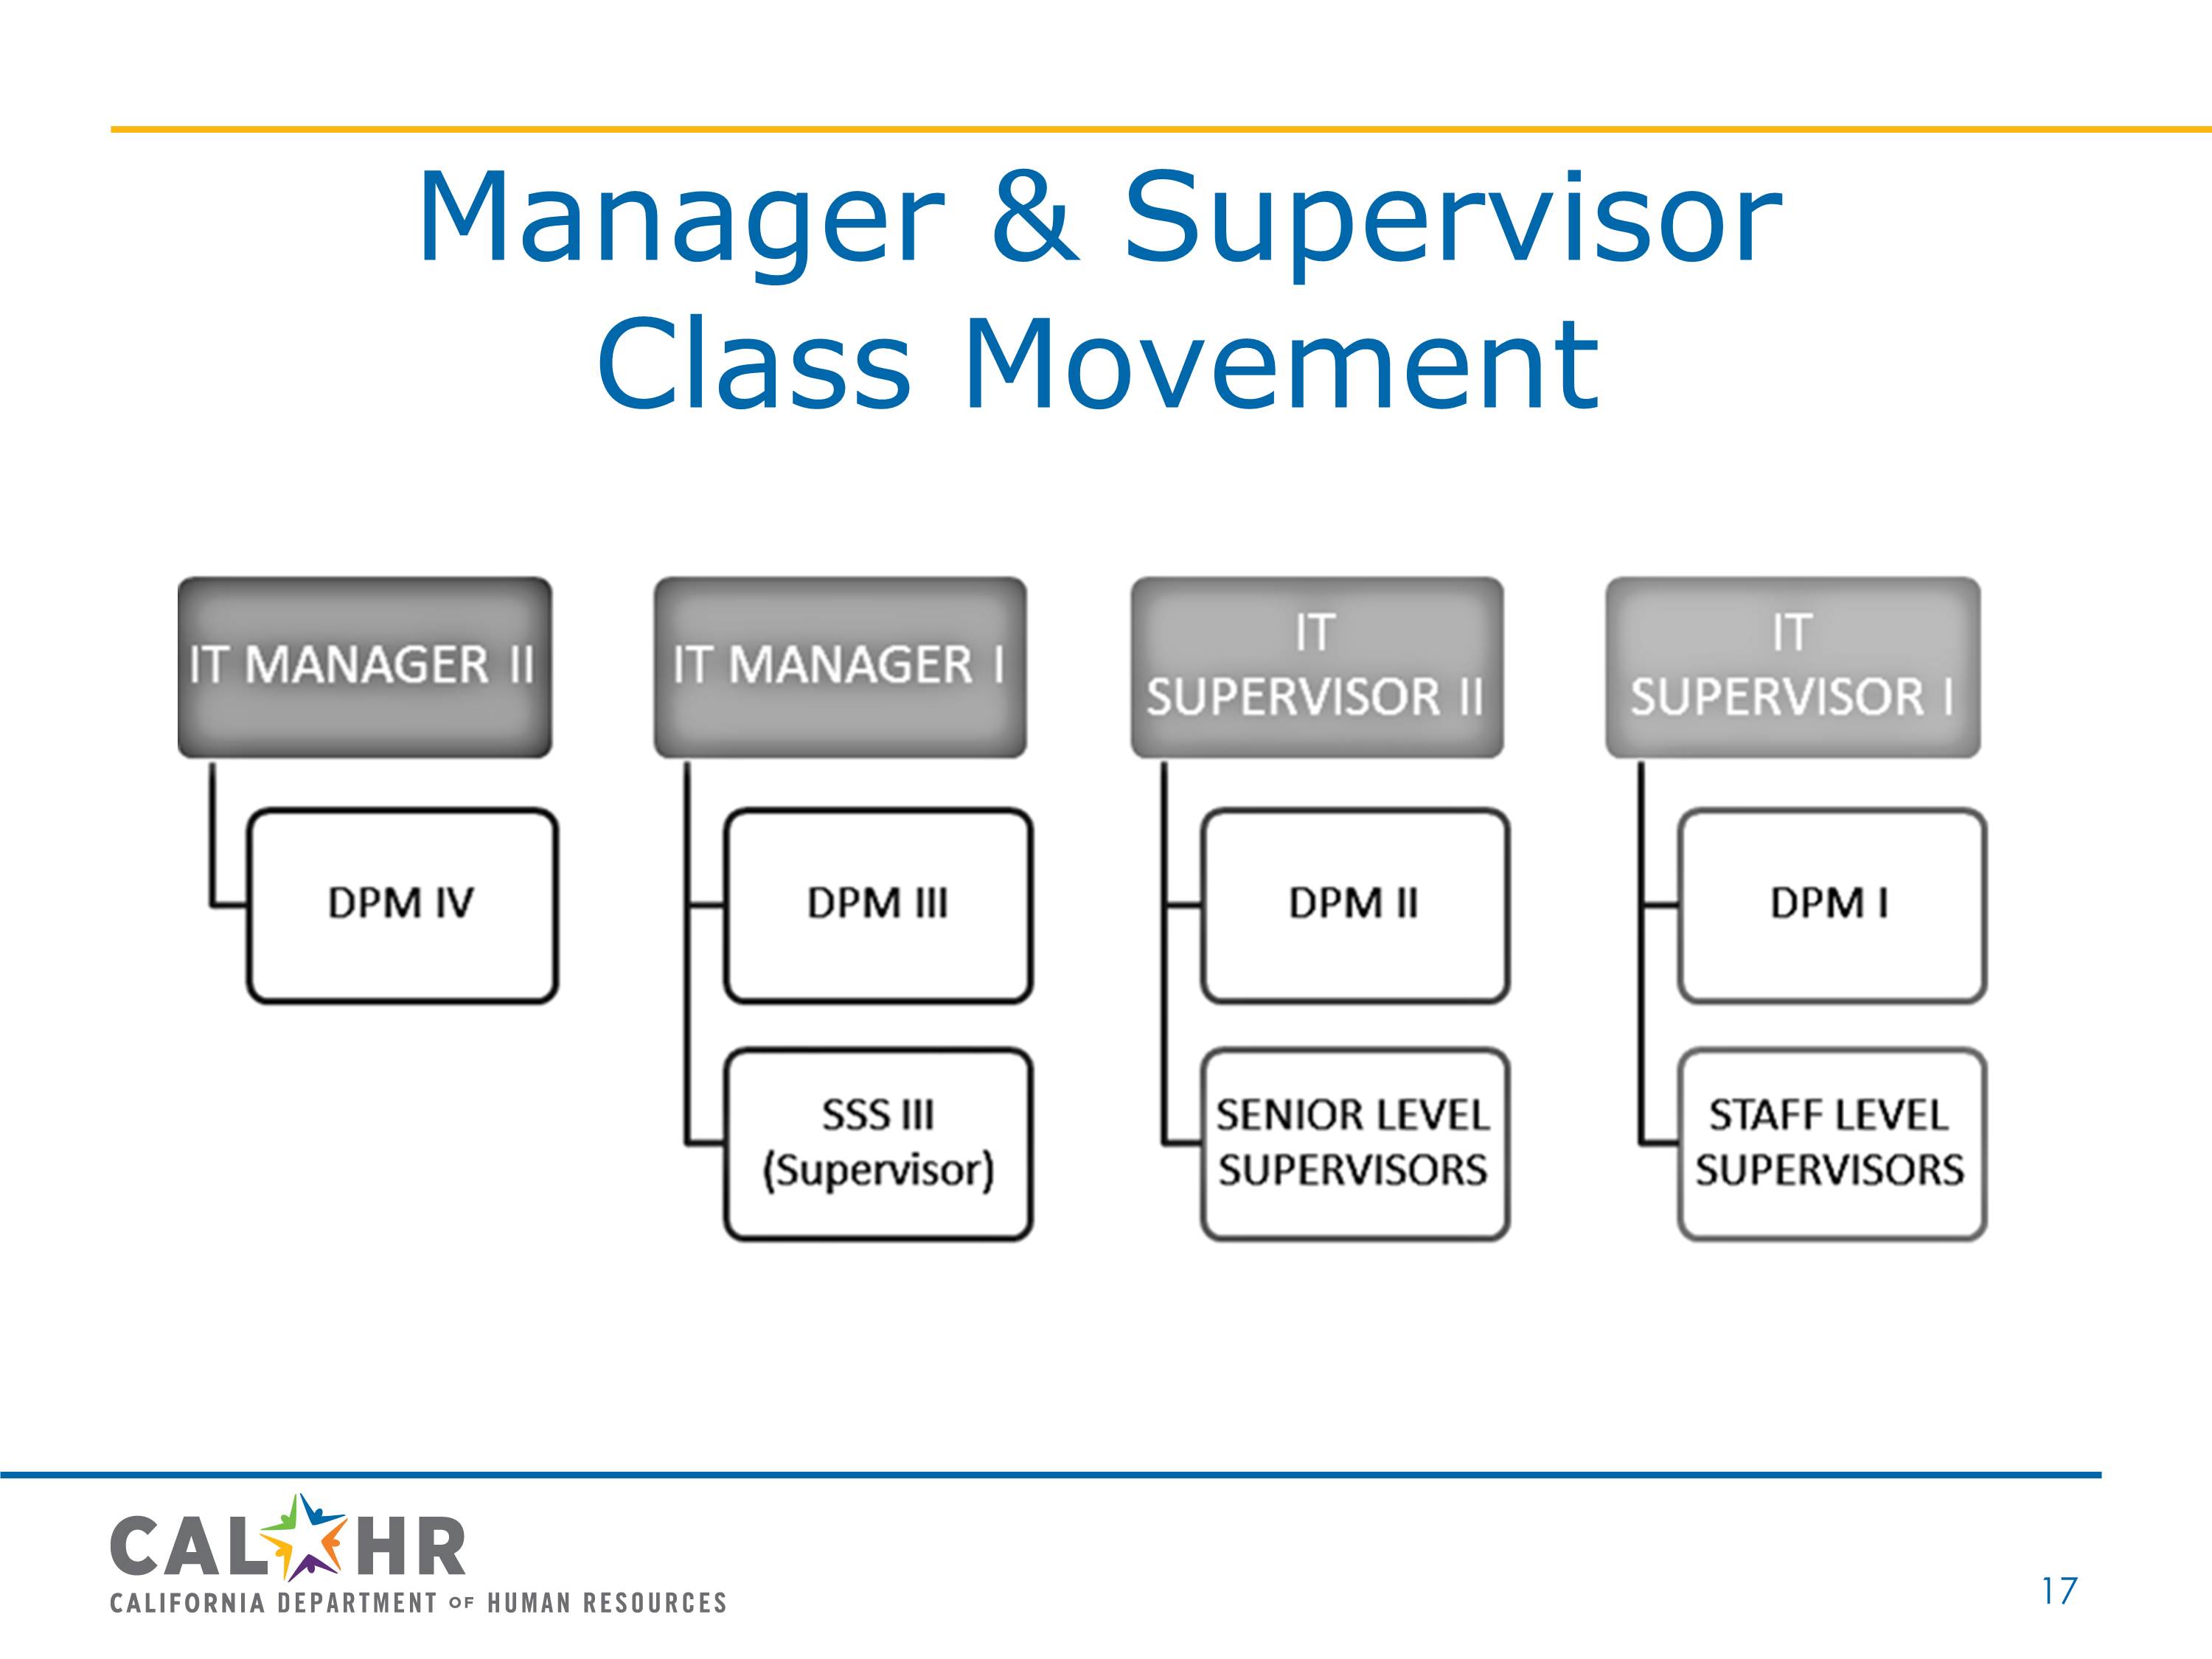 Manager & Supervisor Class Movement